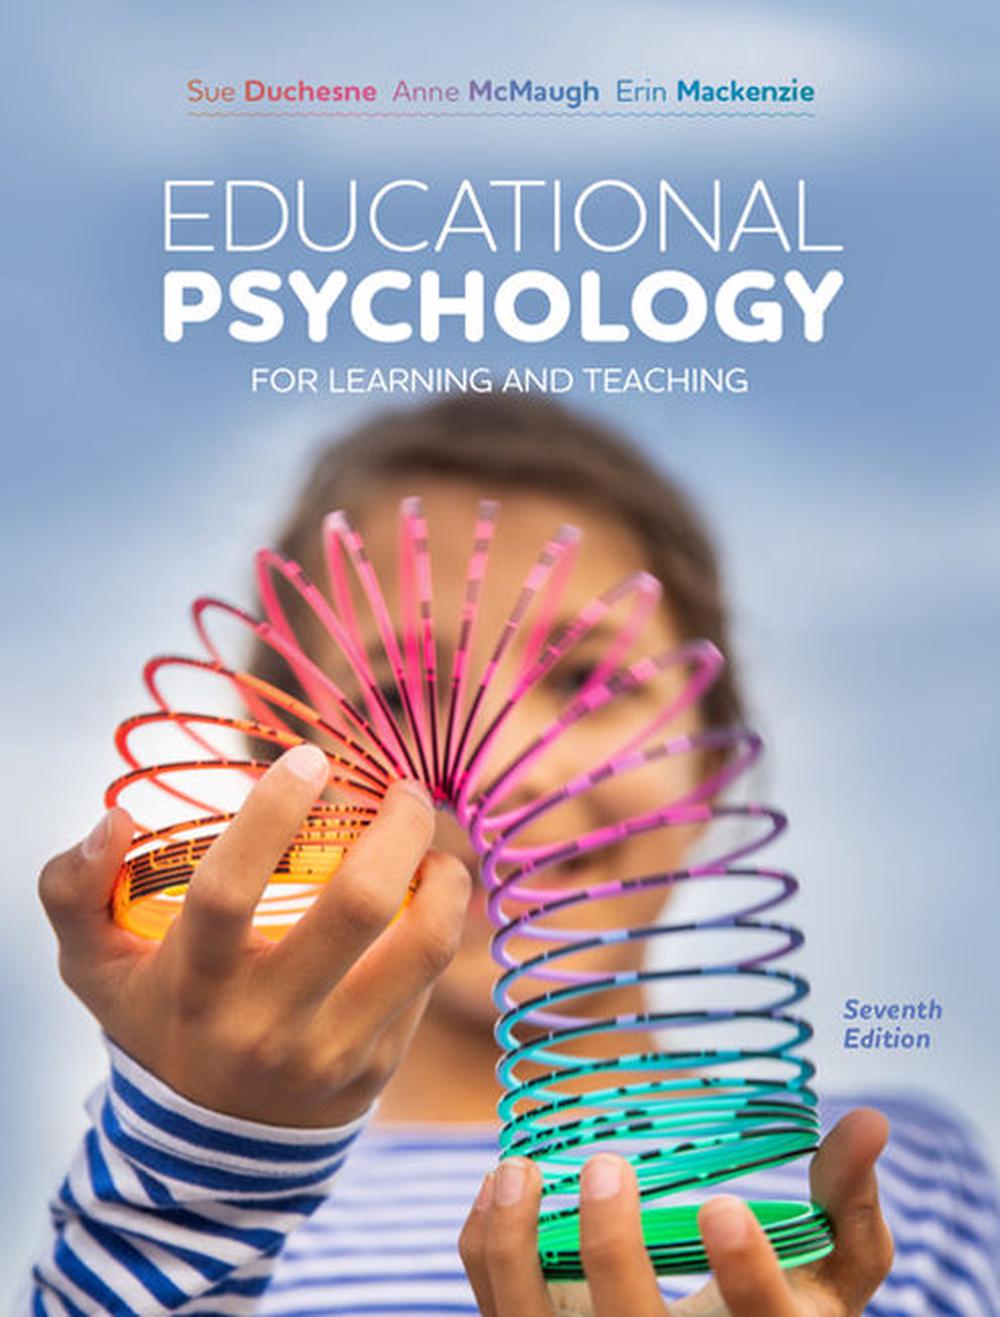 educational psychology articles 2022